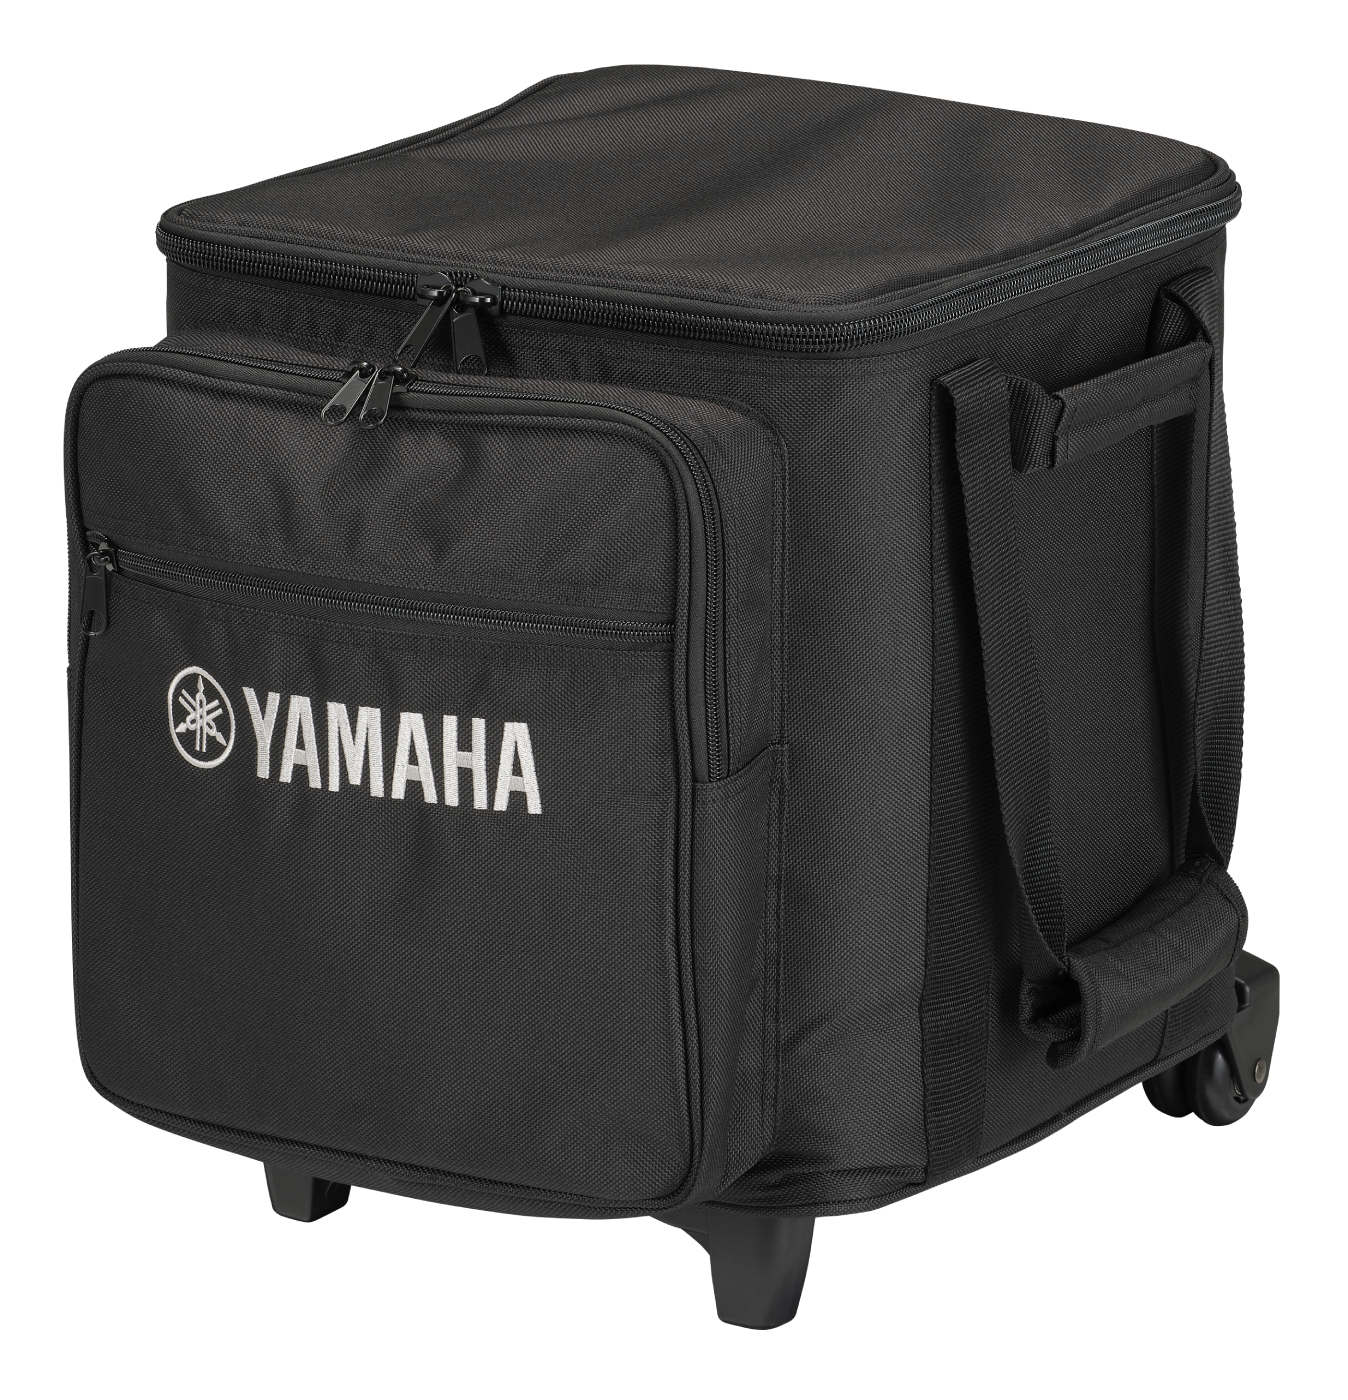 Yamaha Valise Pour Stagepas 200 - Flightcase para accesorios - Variation 2